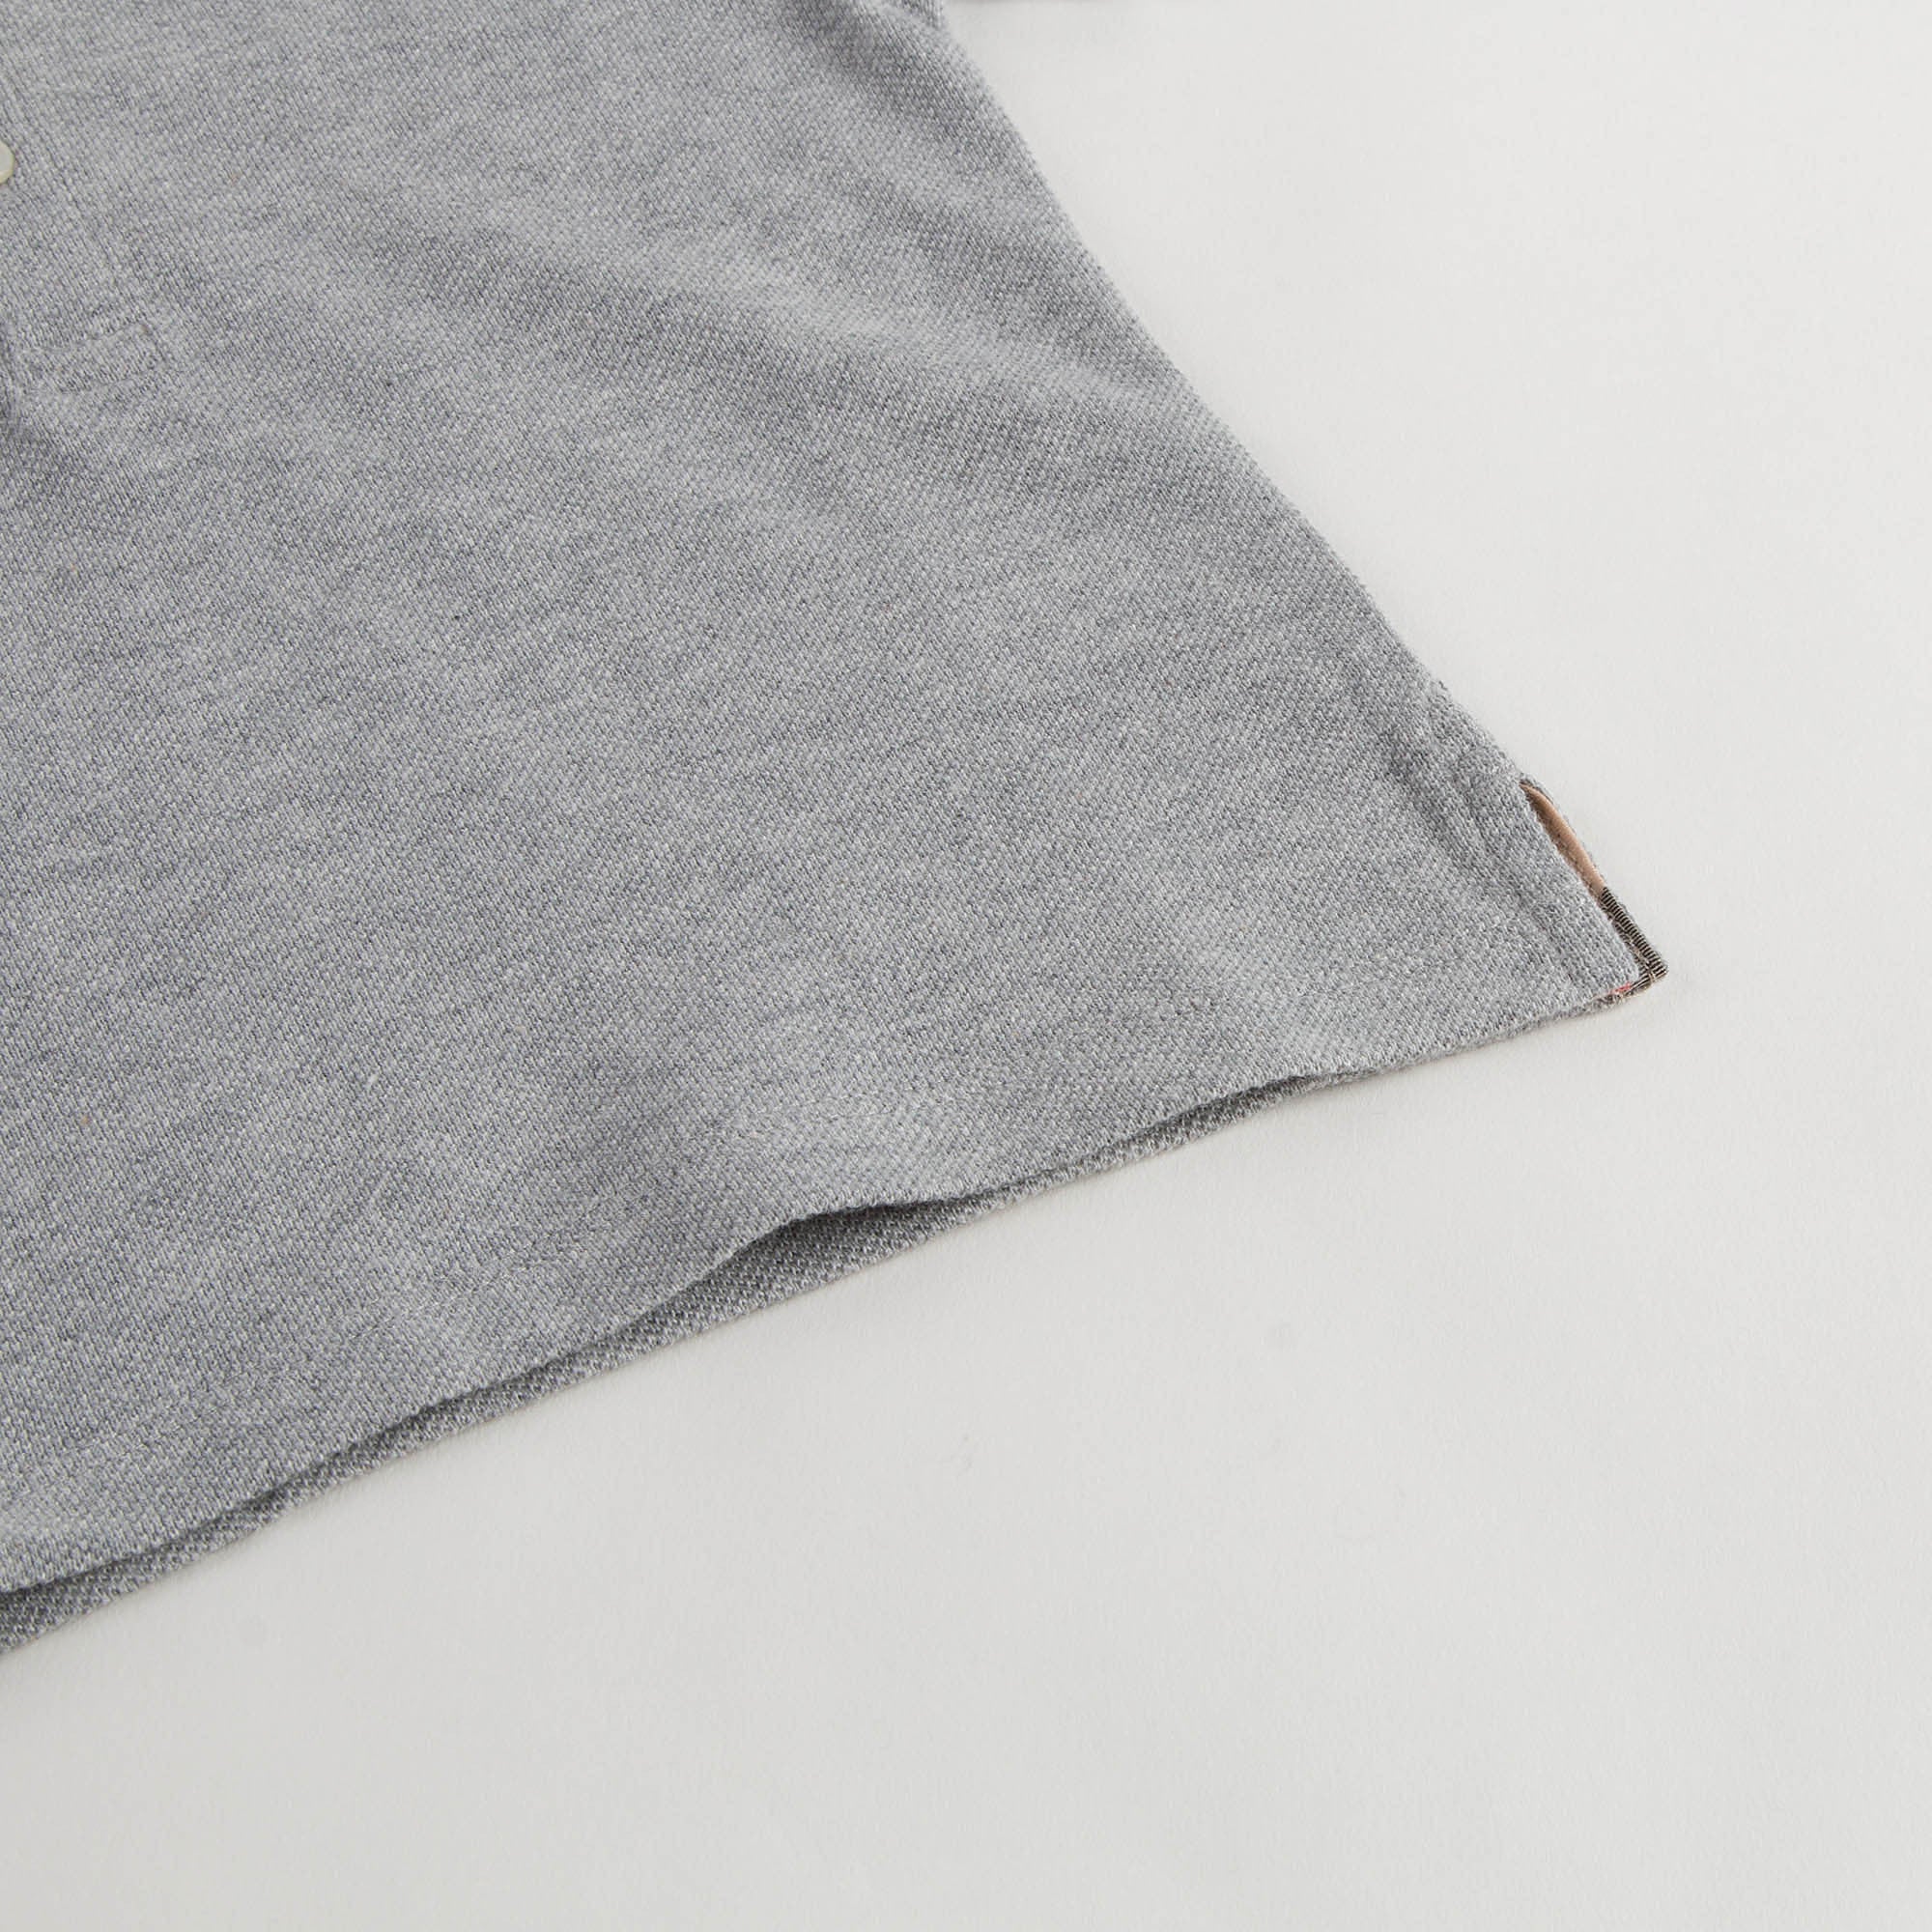 Boys Grey Polo Shirt With Check Collar - CÉMAROSE | Children's Fashion Store - 5